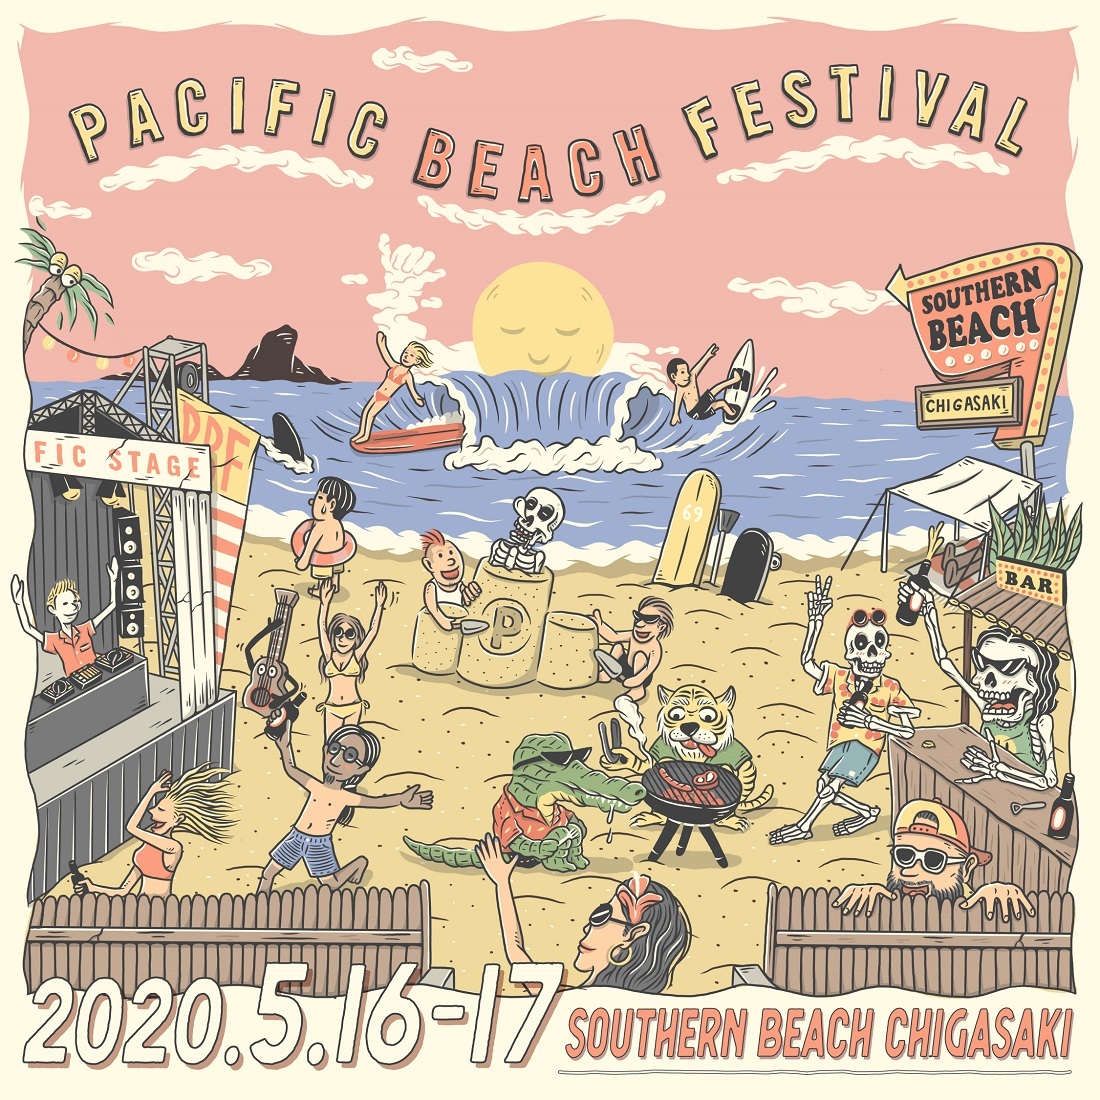 PACIFIC BEACH FESTIVAL20